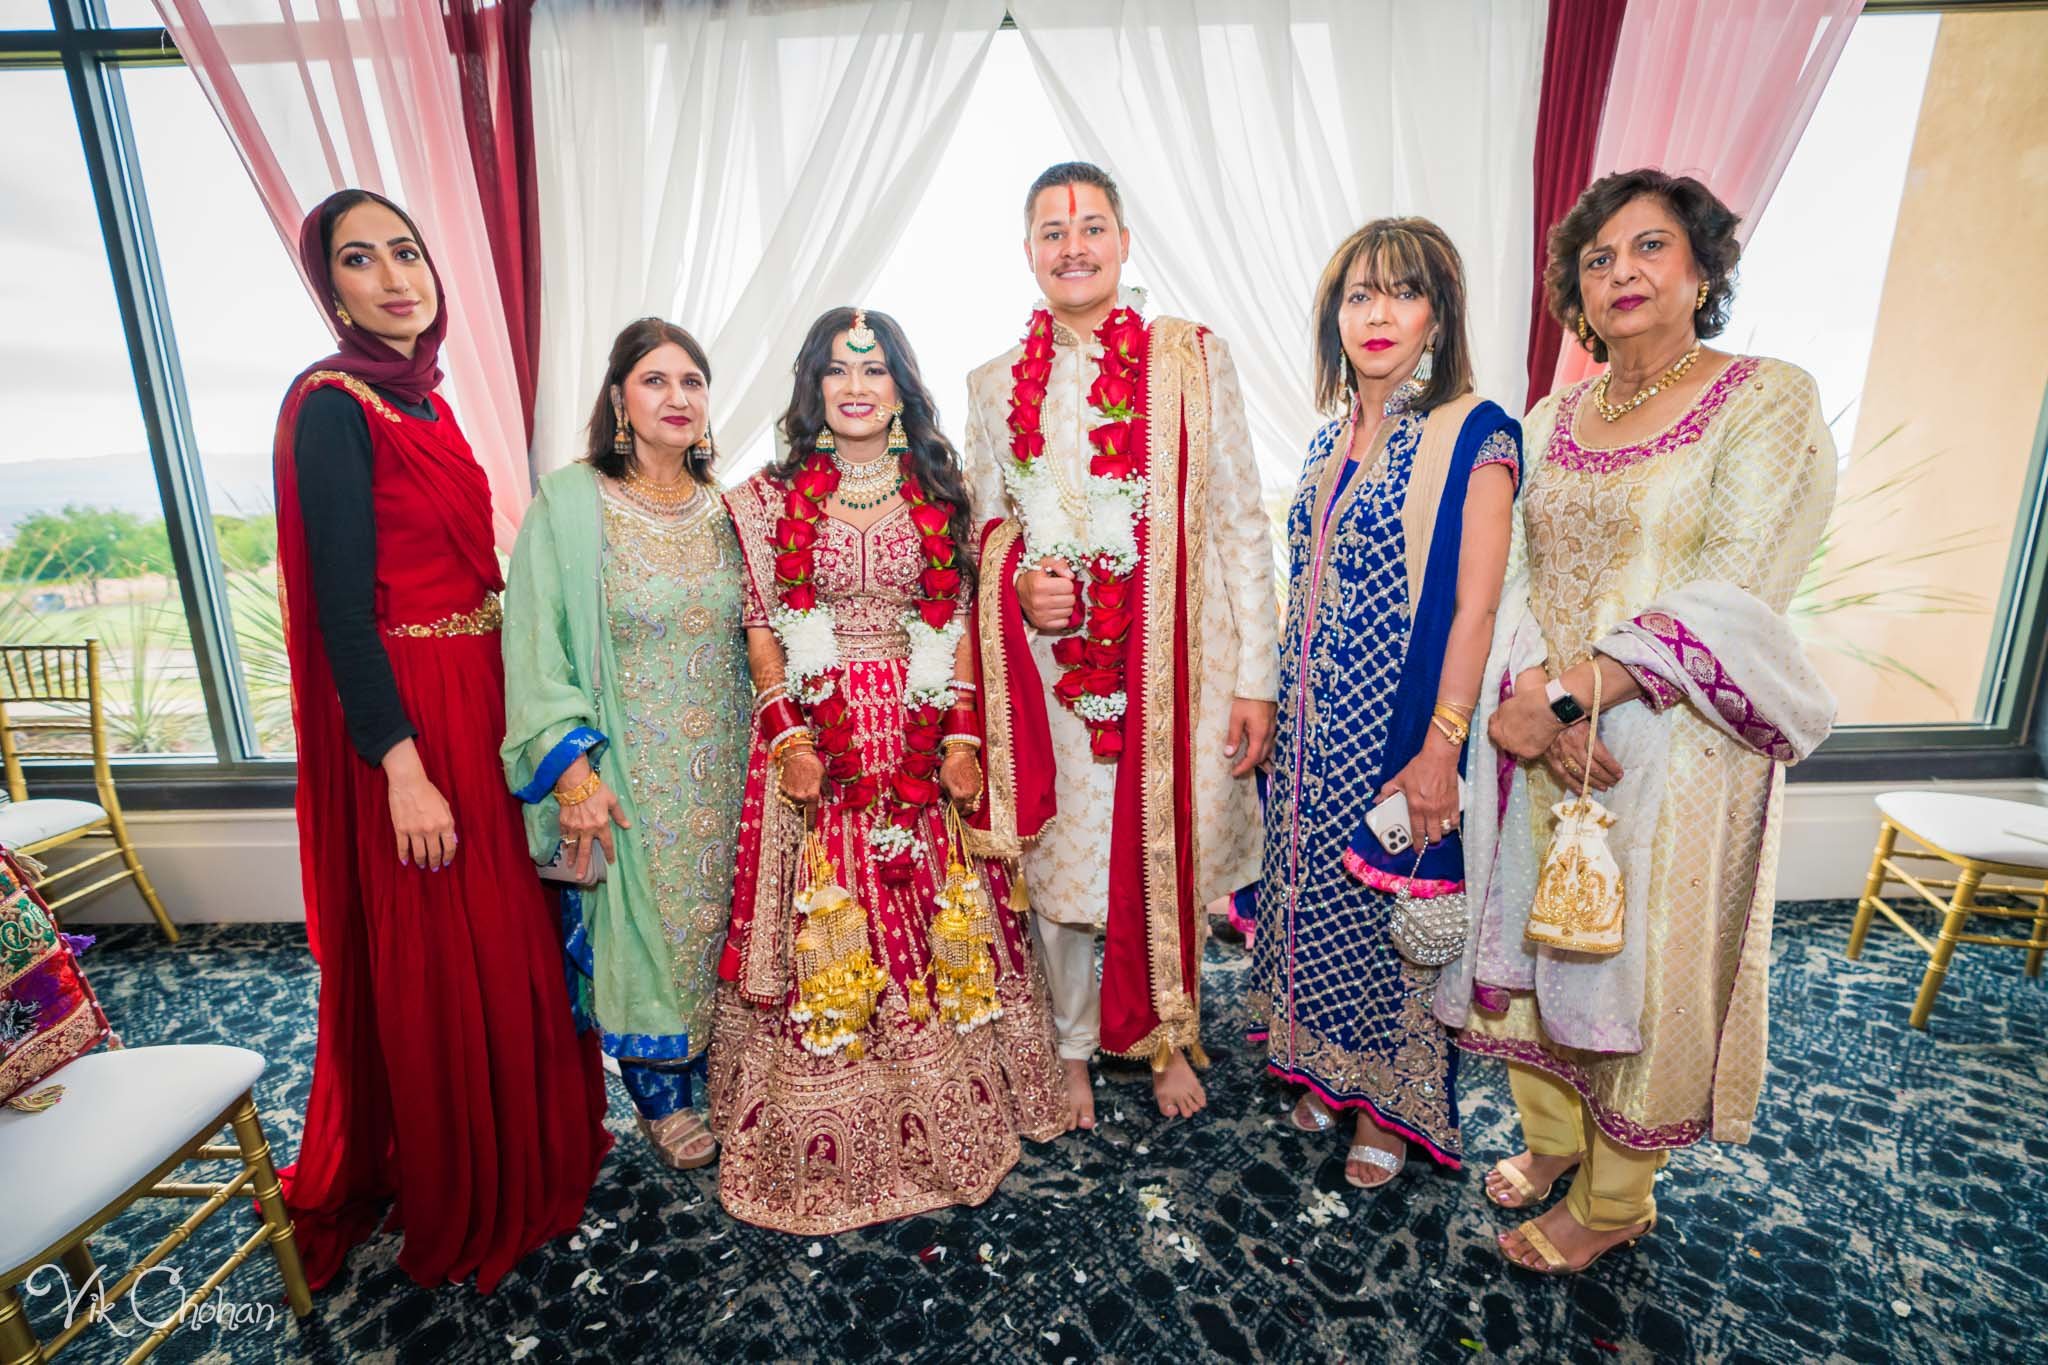 2022-06-09-Annie-&-Steven-Las-Vegas-Indian-Wedding-Ceremony-Photography-Vik-Chohan-Photography-Photo-Booth-Social-Media-VCP-211.jpg